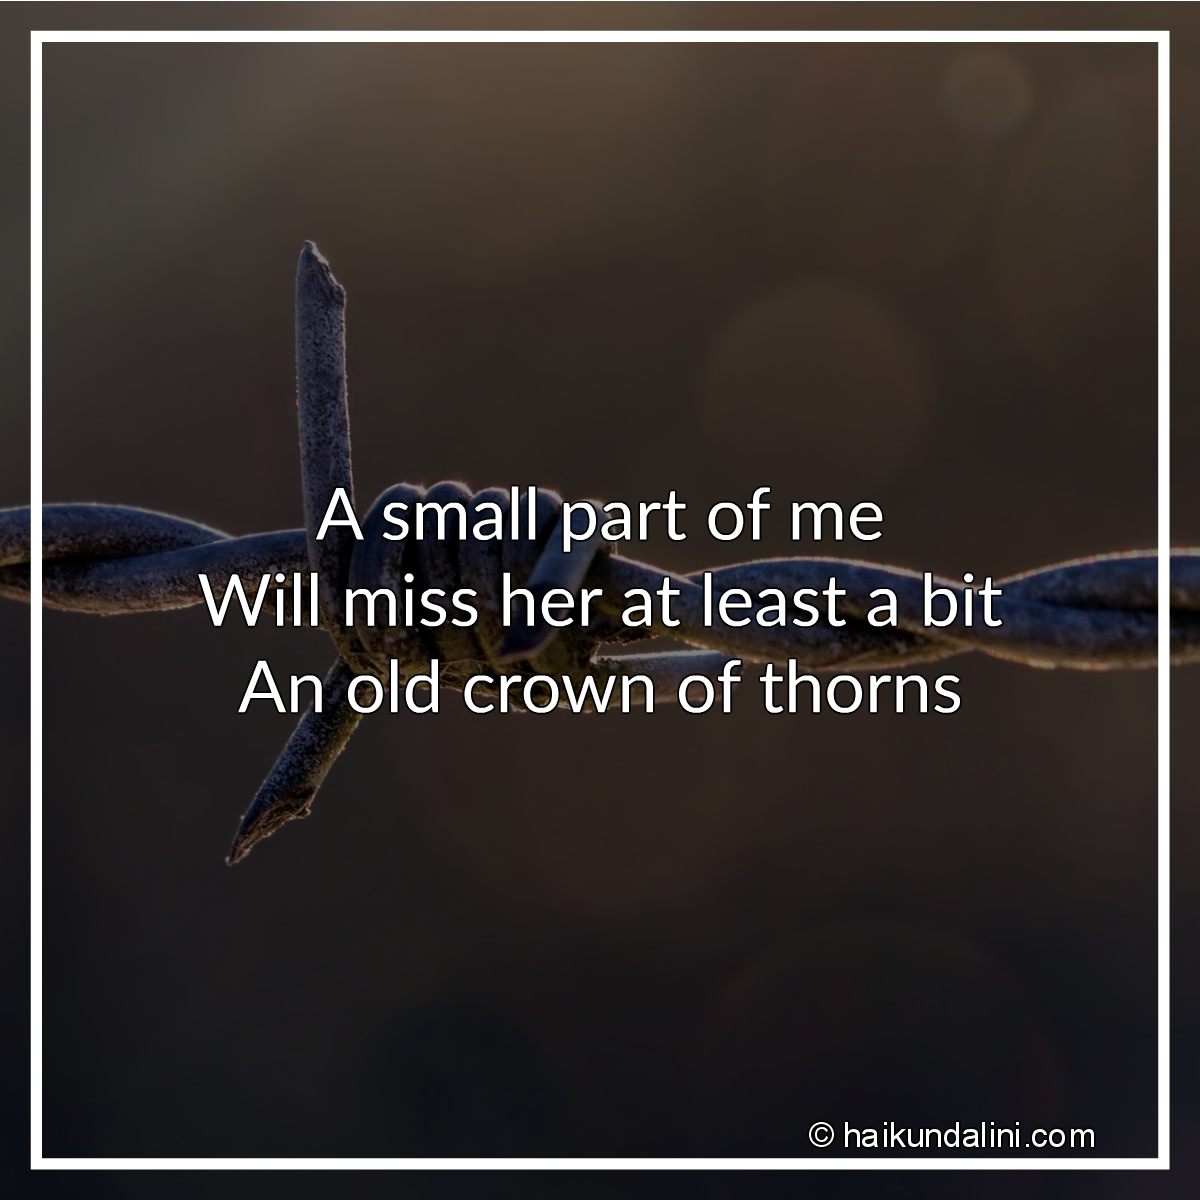 thorns